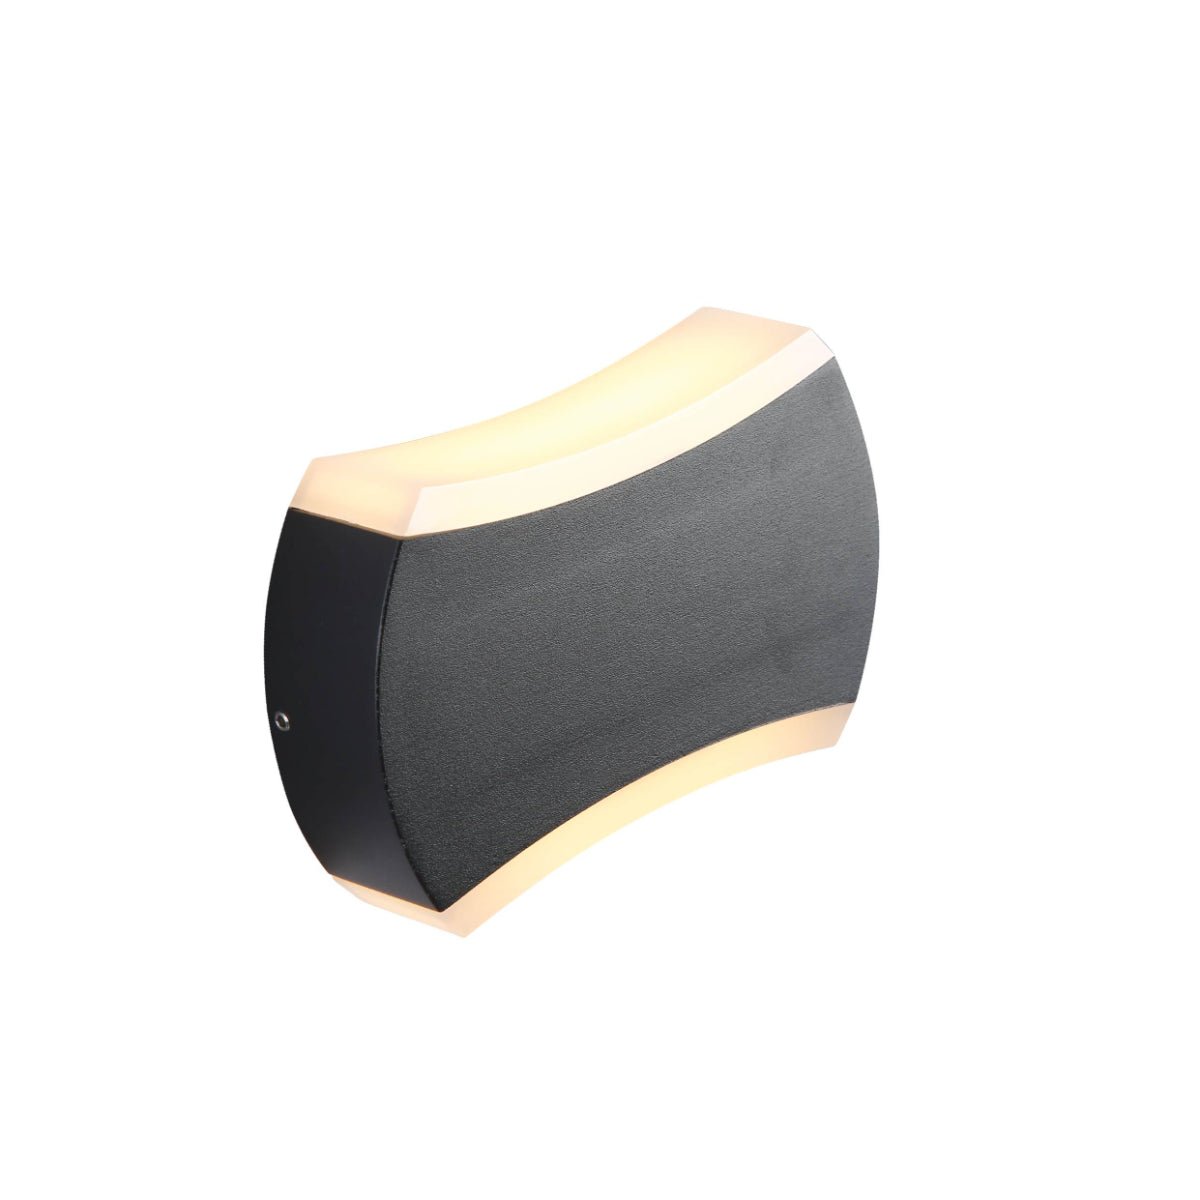 Main image of Black Quatro Arc Up Down Outdoor Modern LED Wall Light | TEKLED 182-03380